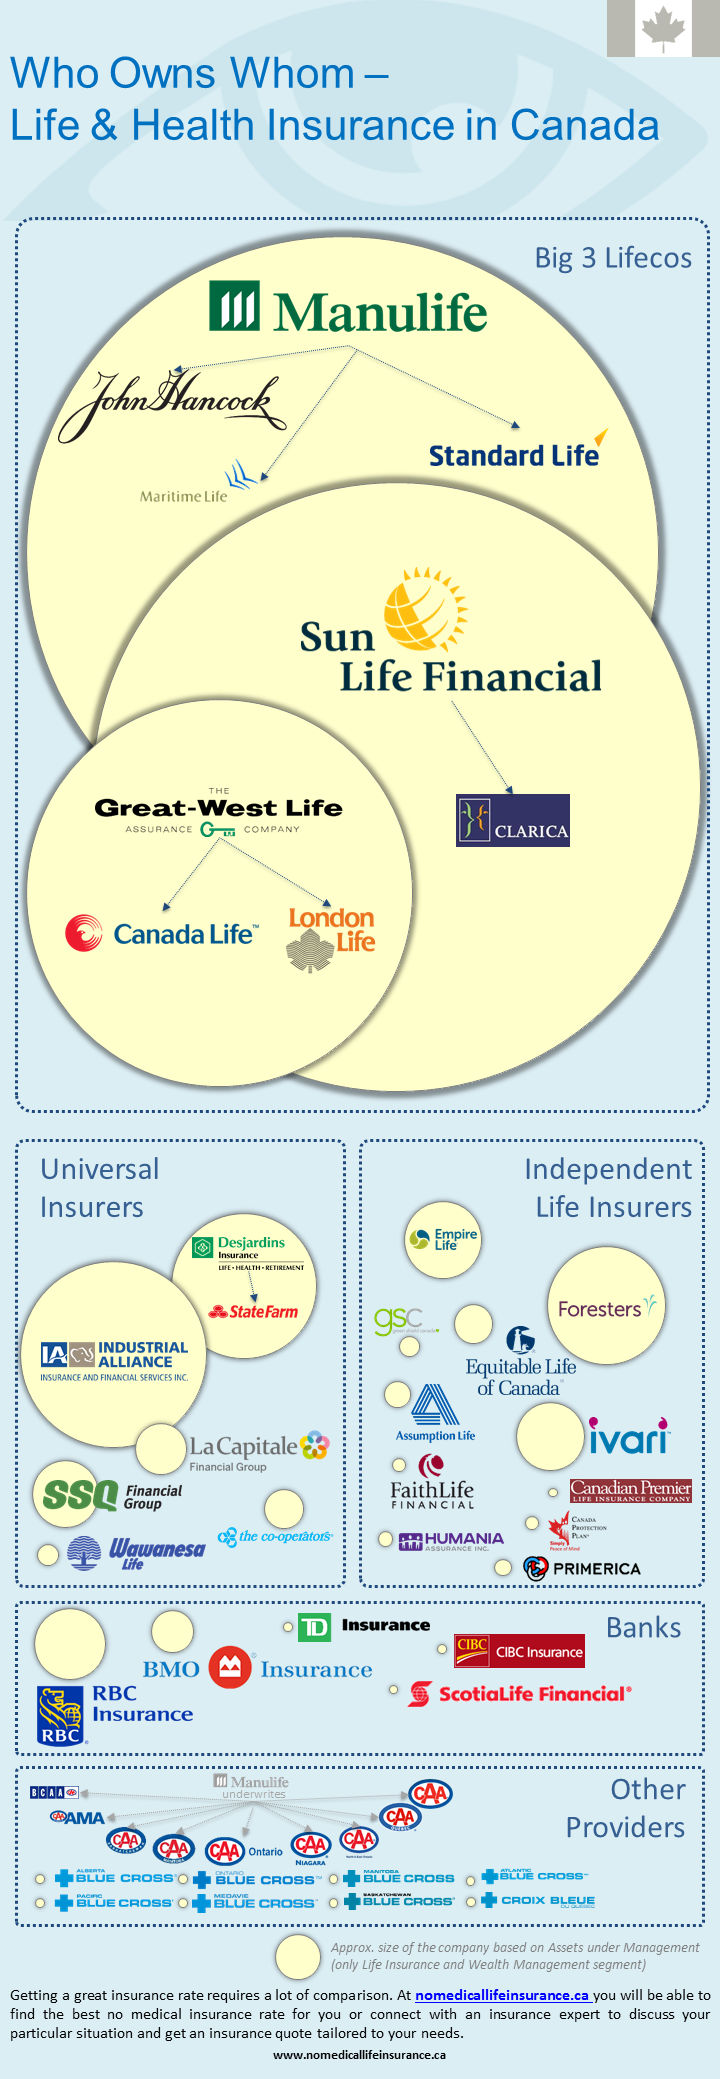 Canadian Life Insurance companies